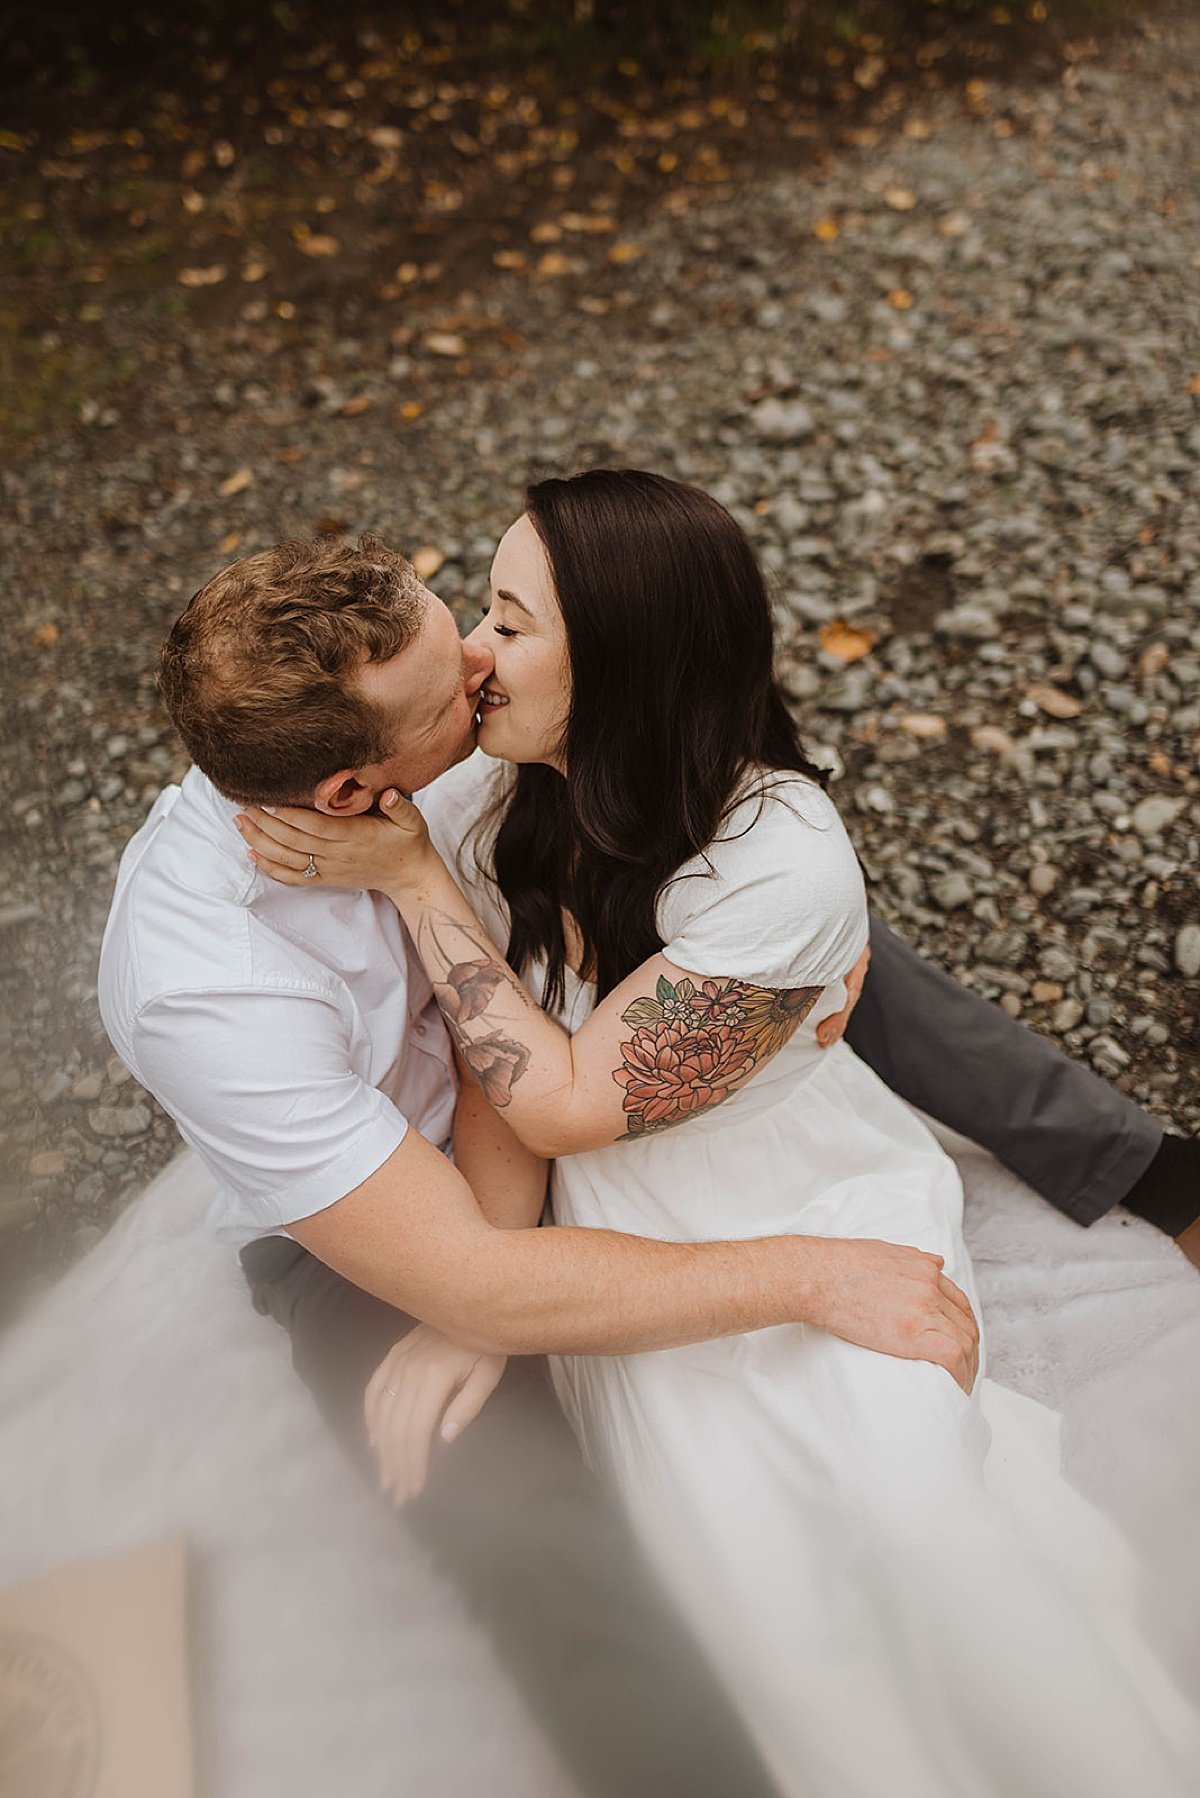  Man and woman kiss at outdoor picnic in engagement shoot in alaska 